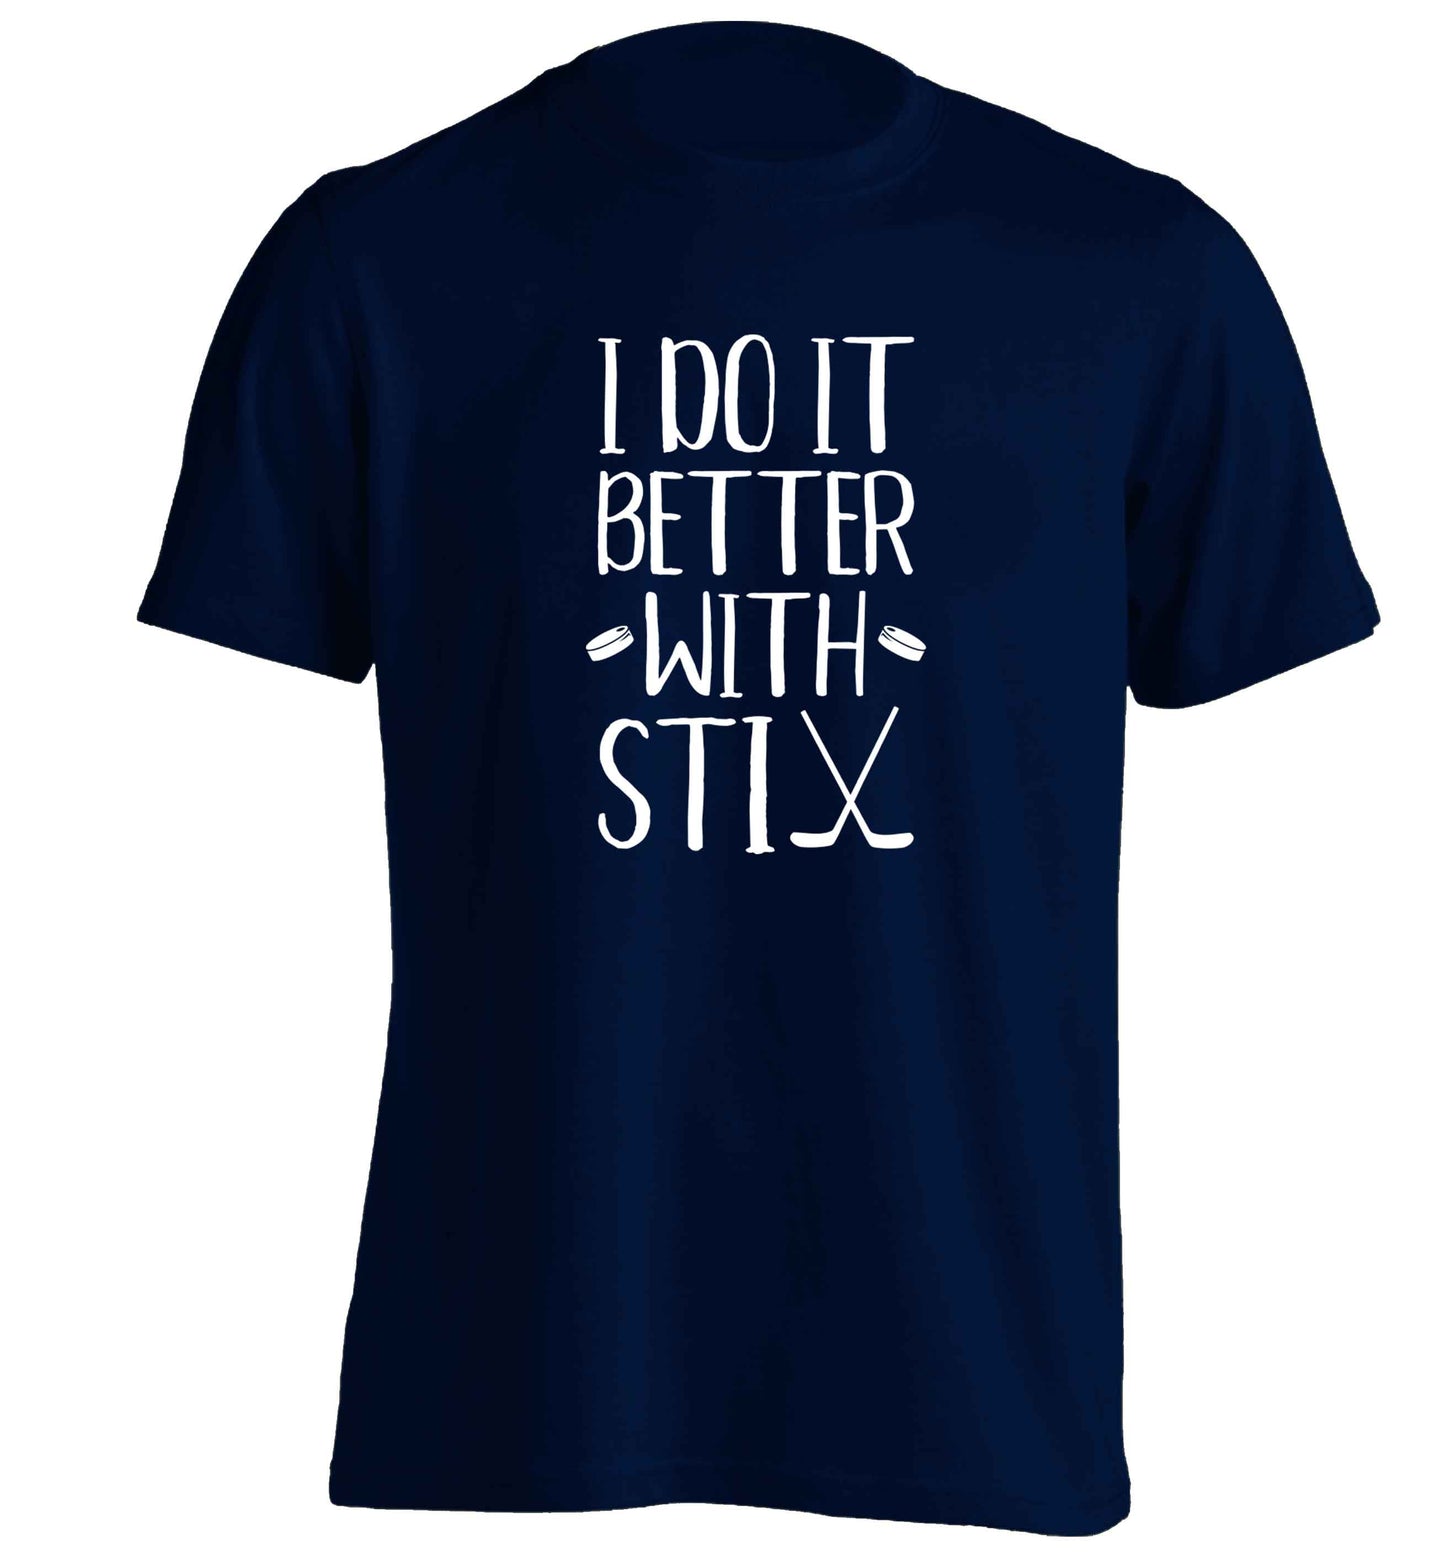 I do it better with stix (hockey) adults unisex navy Tshirt 2XL